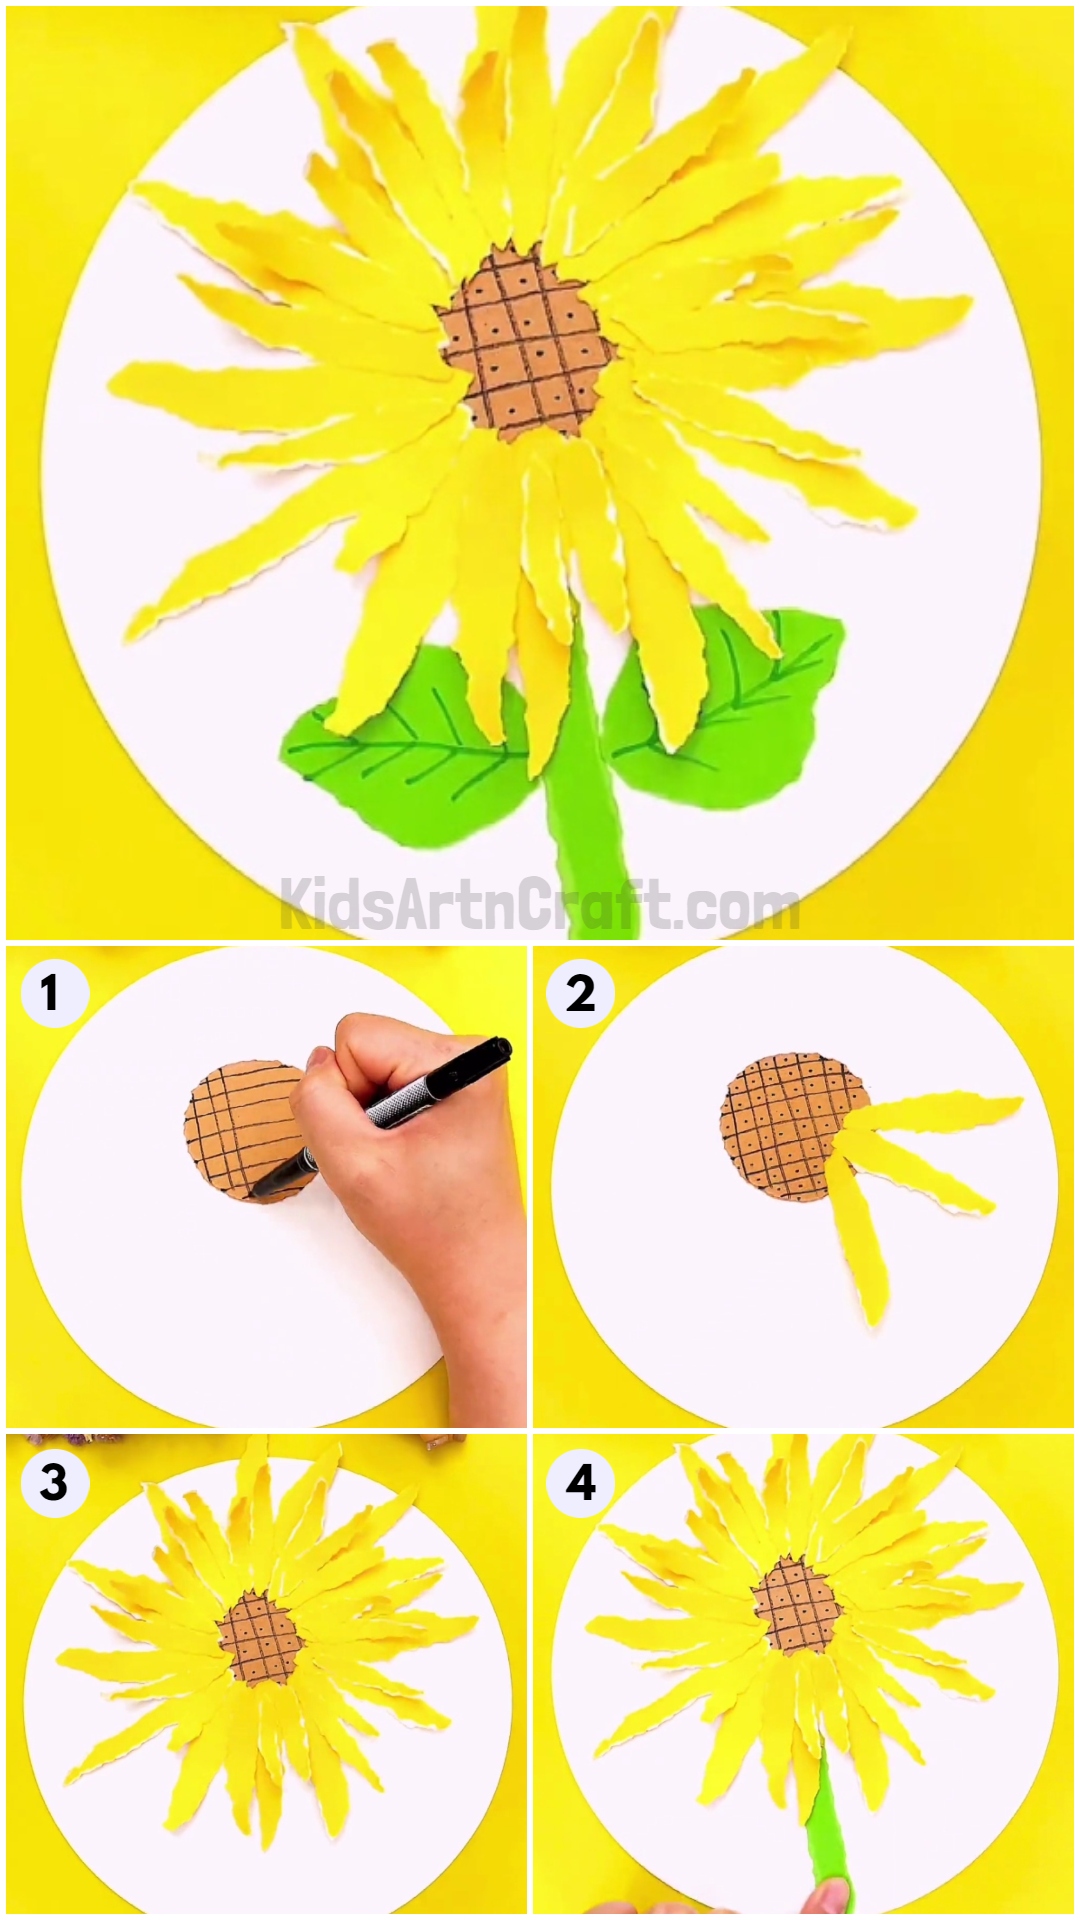 Creative Paper Sunflower Craft Idea For Beginners